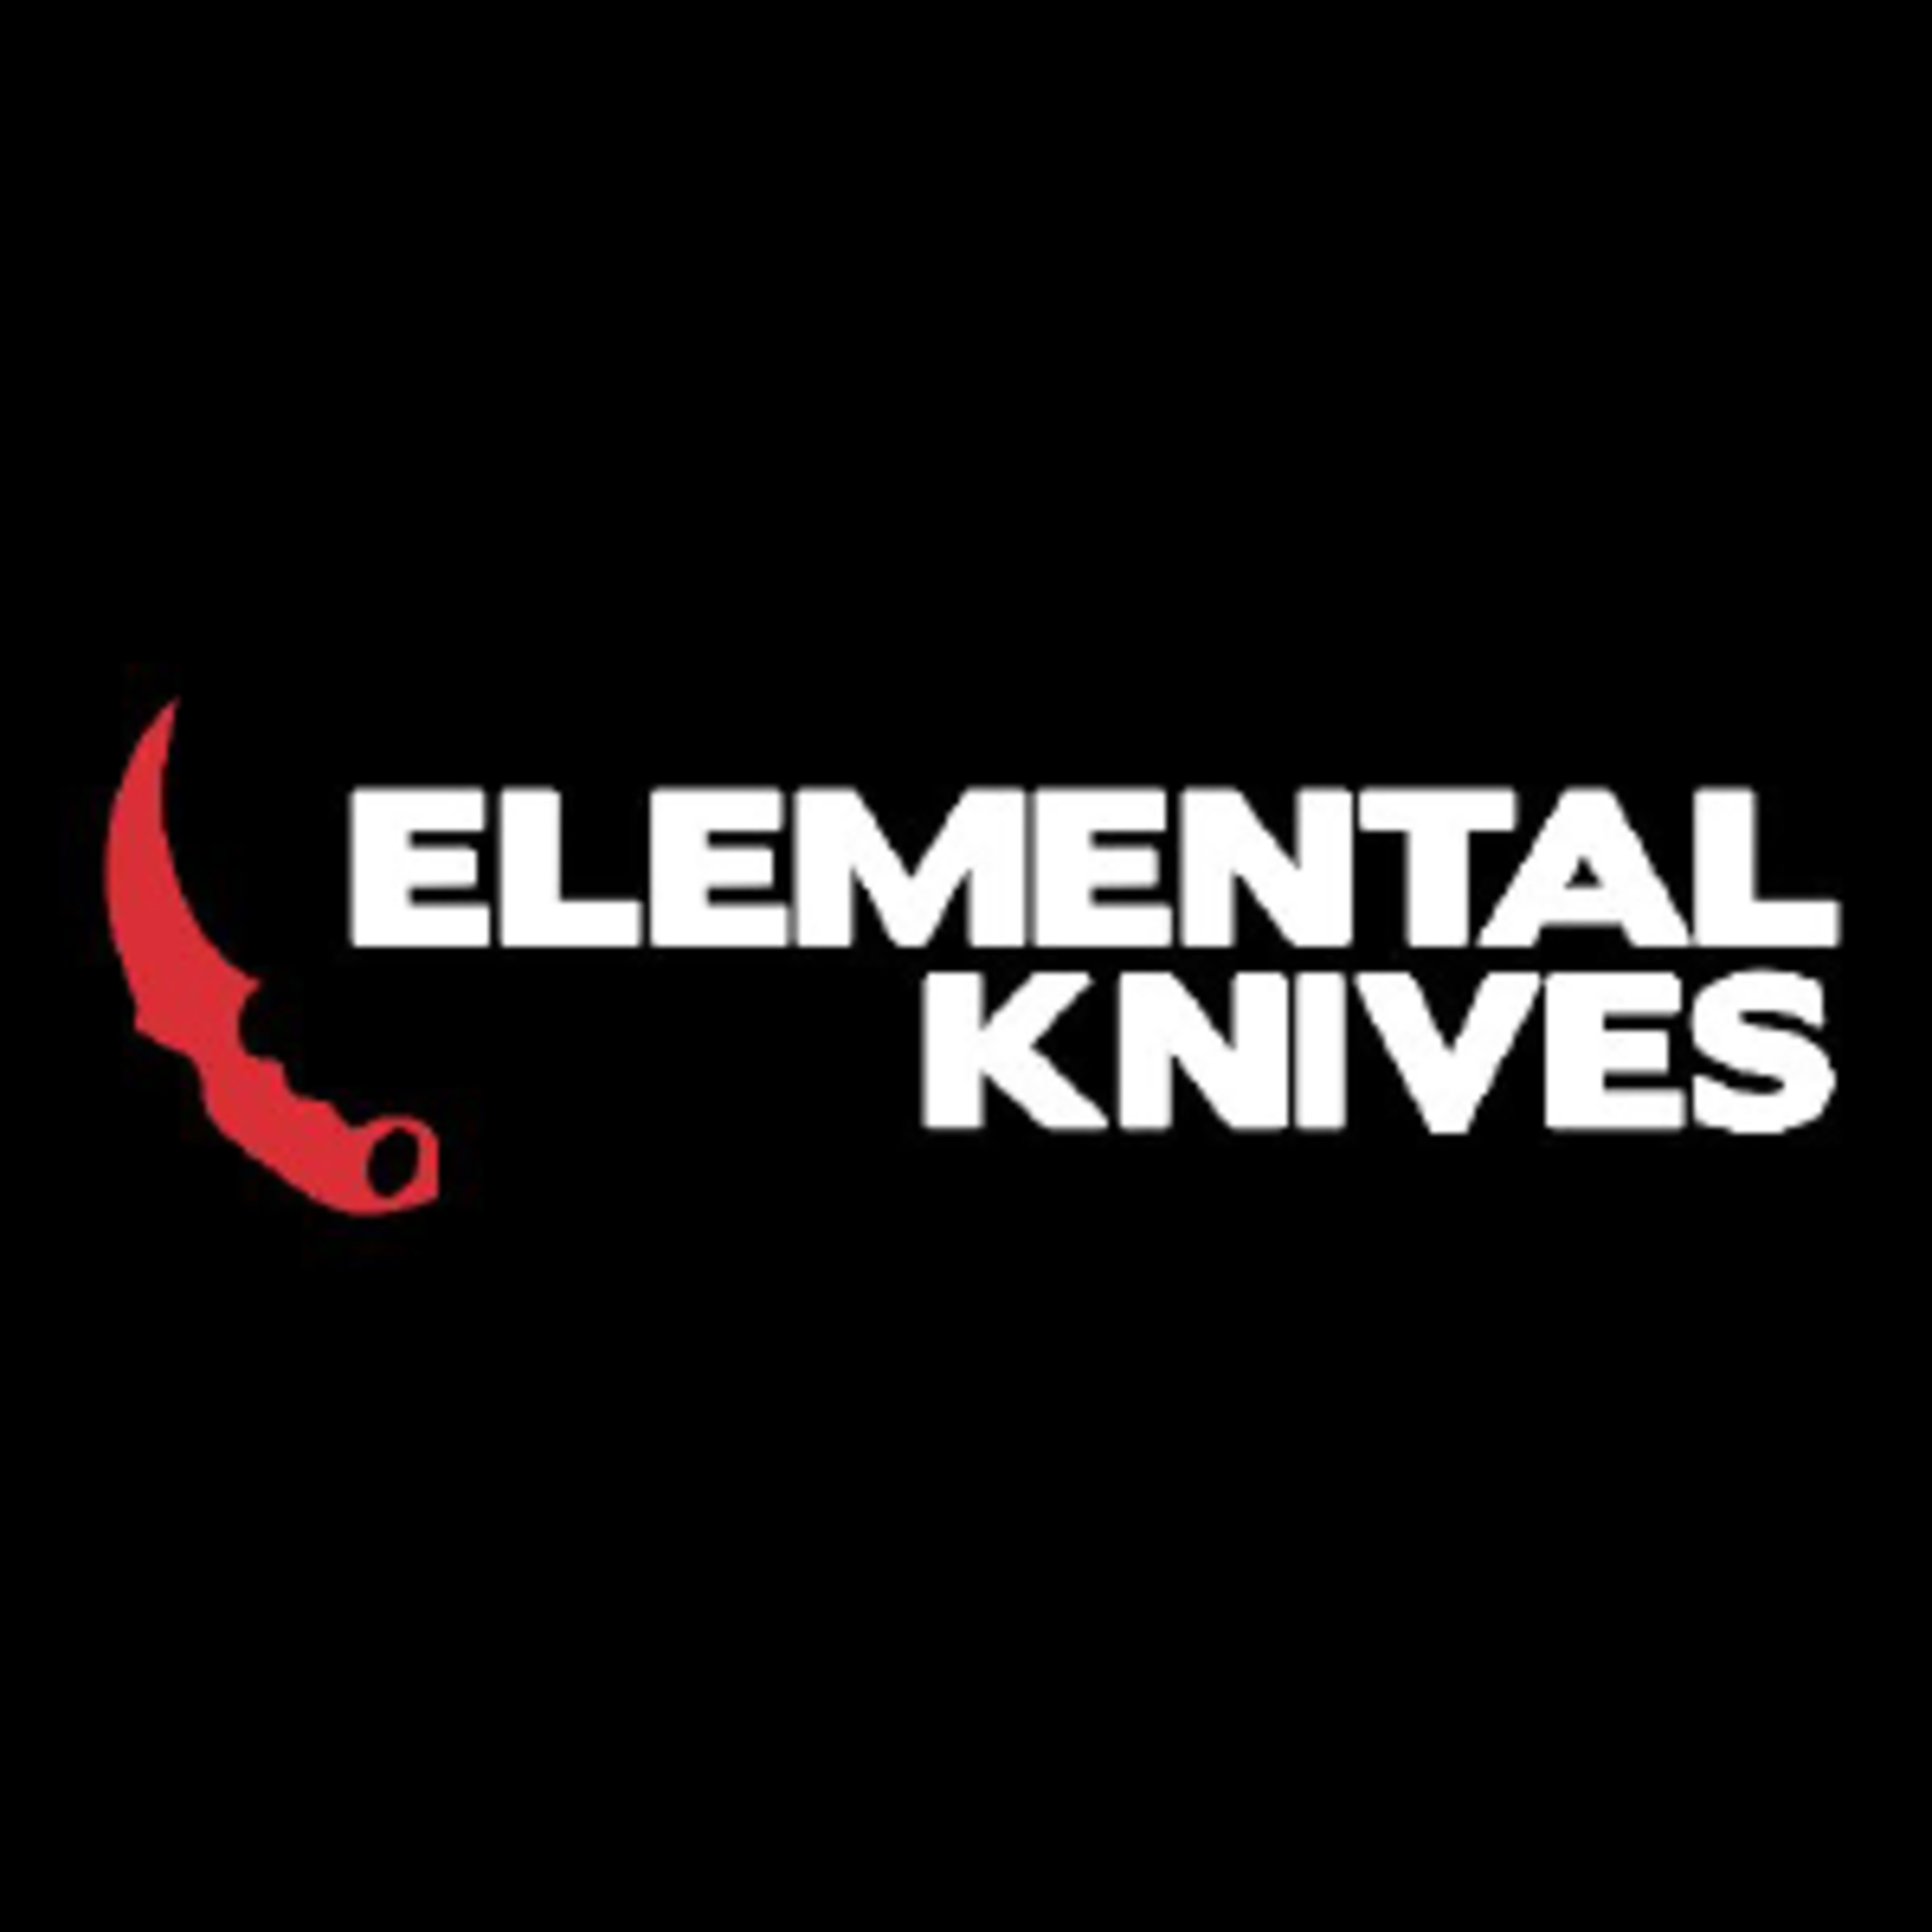 Elemental knives Code